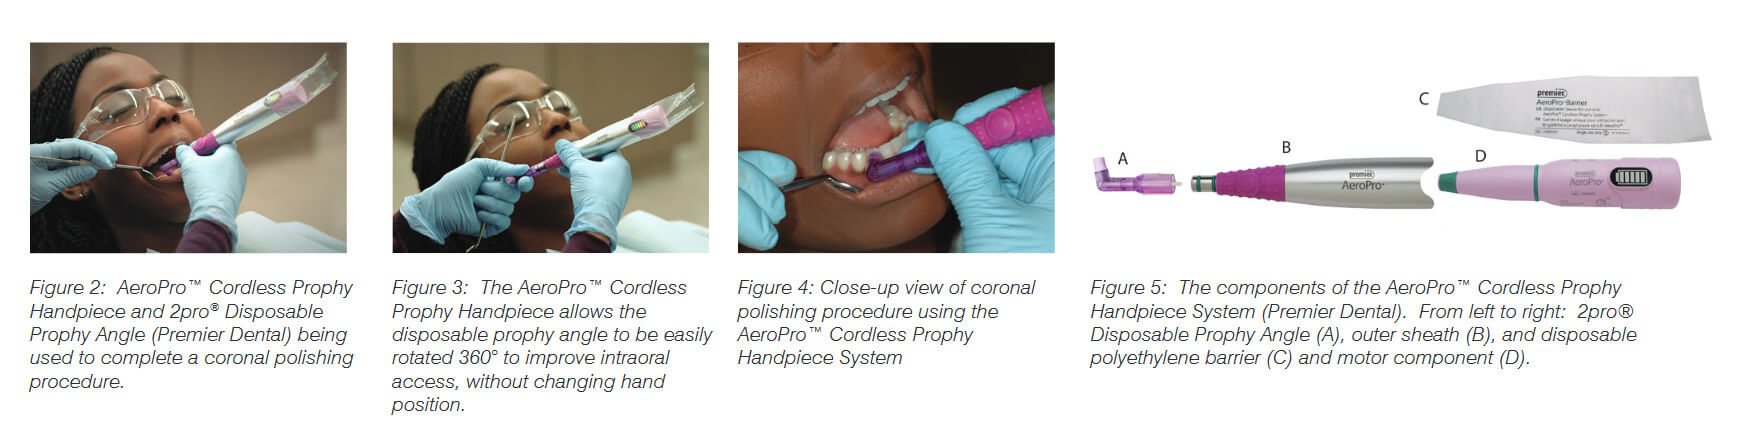 AeroPro™ Cordless Prophy Handpiece System (Premier Dental)